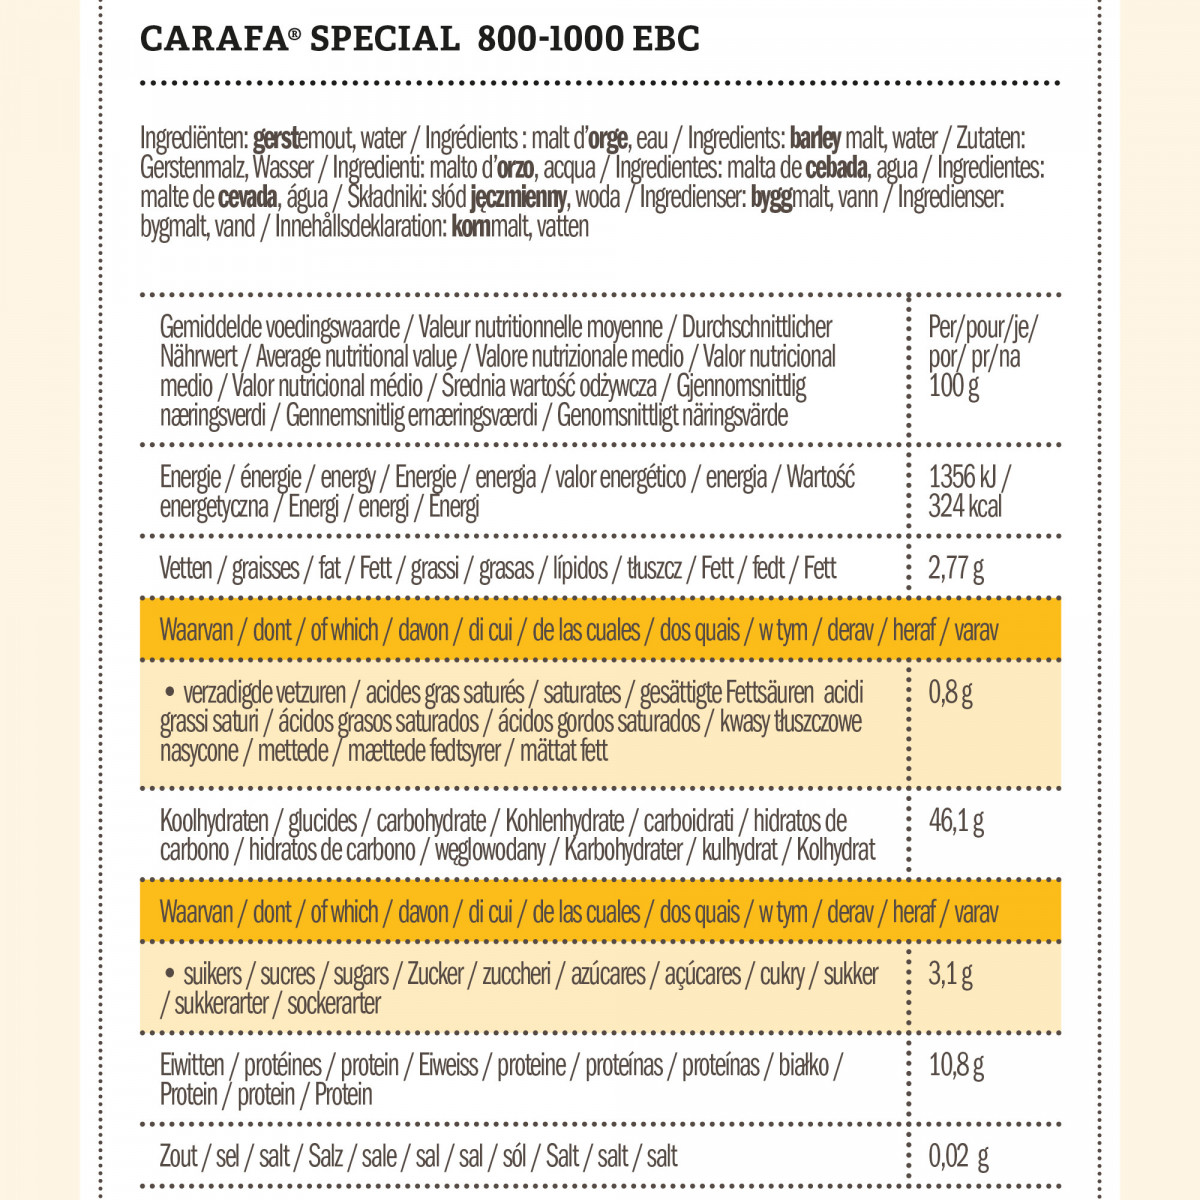 Weyermann® Carafa® Special type 1 800-1000 EBC 5 kg